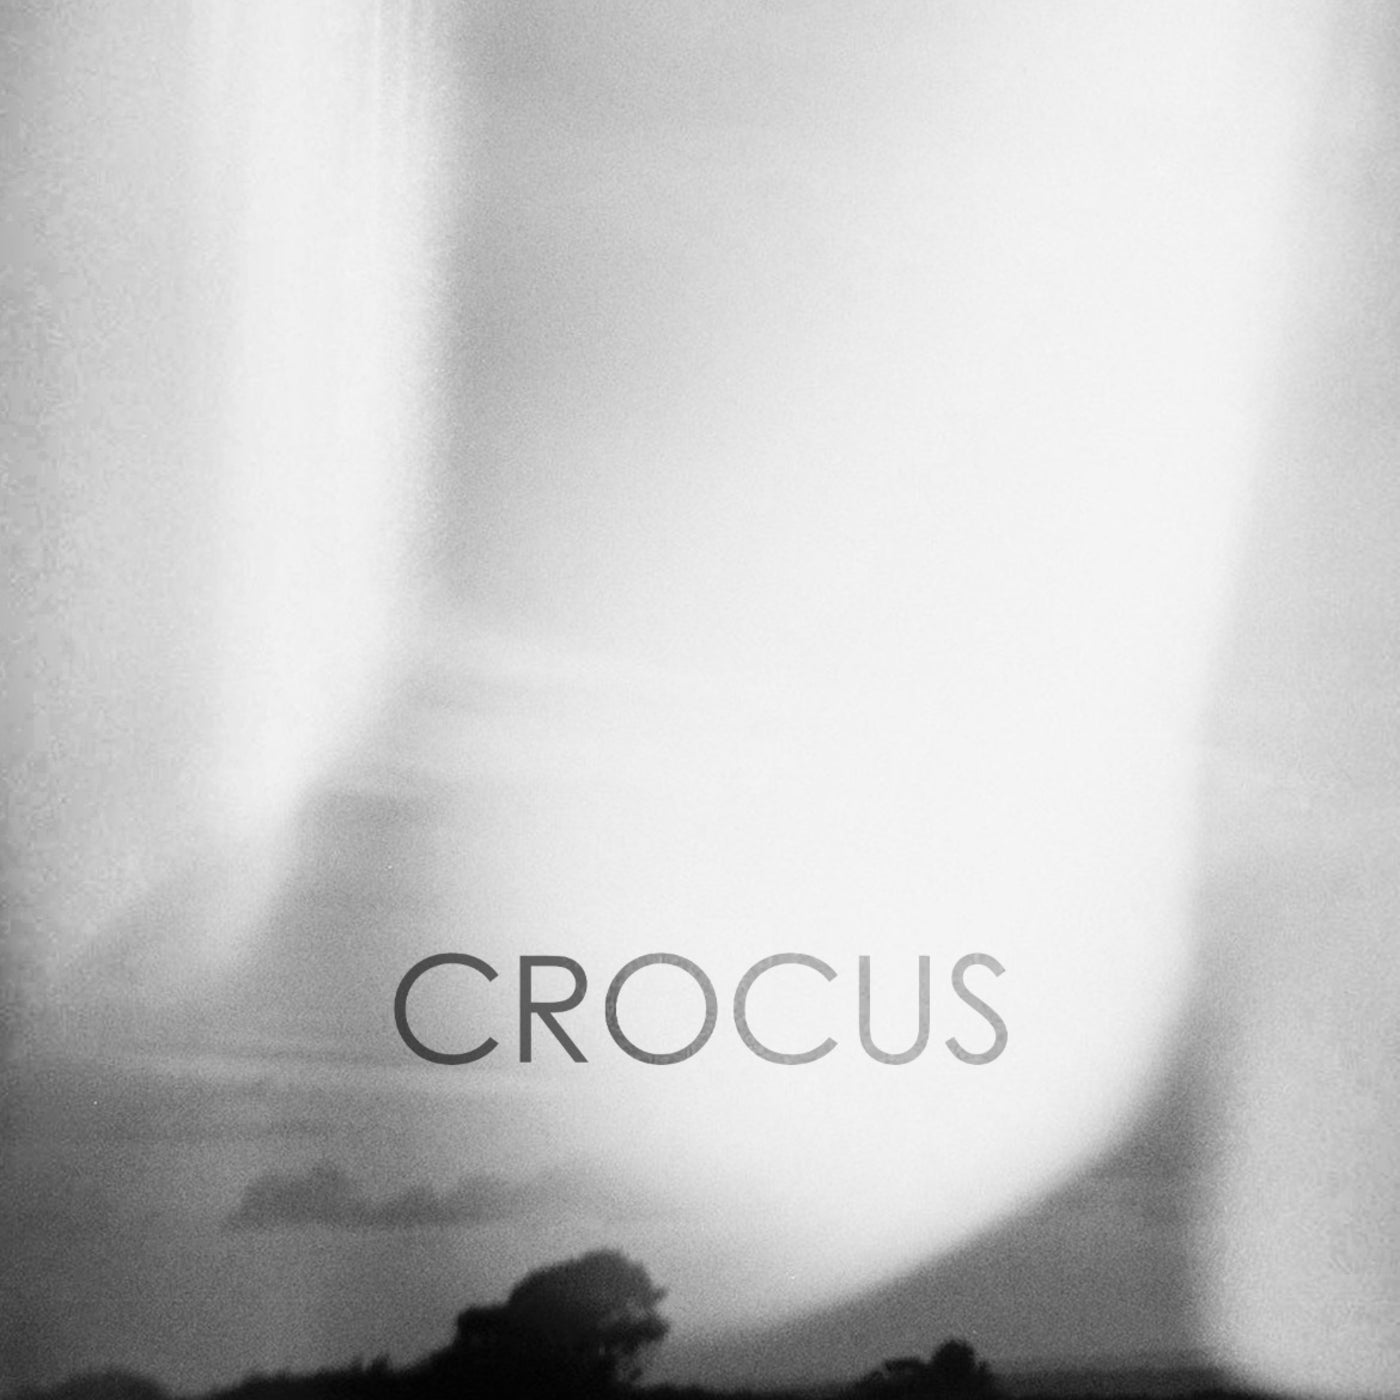 CROCUS - Discography (cassette)